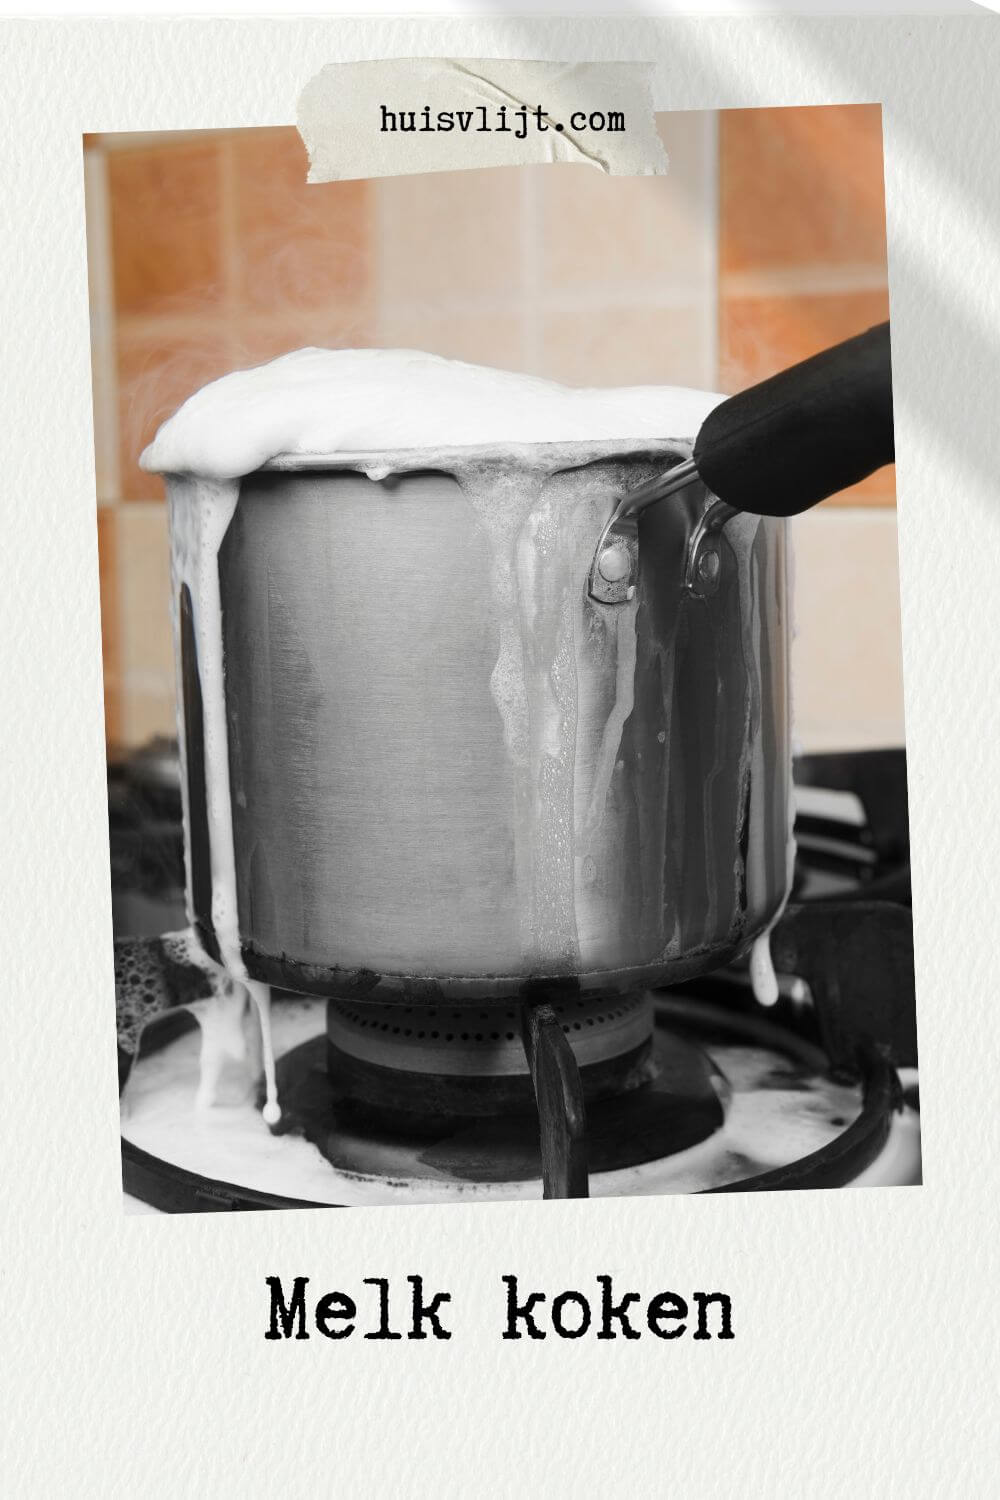 Melk koken + 4 tips tegen overkoken